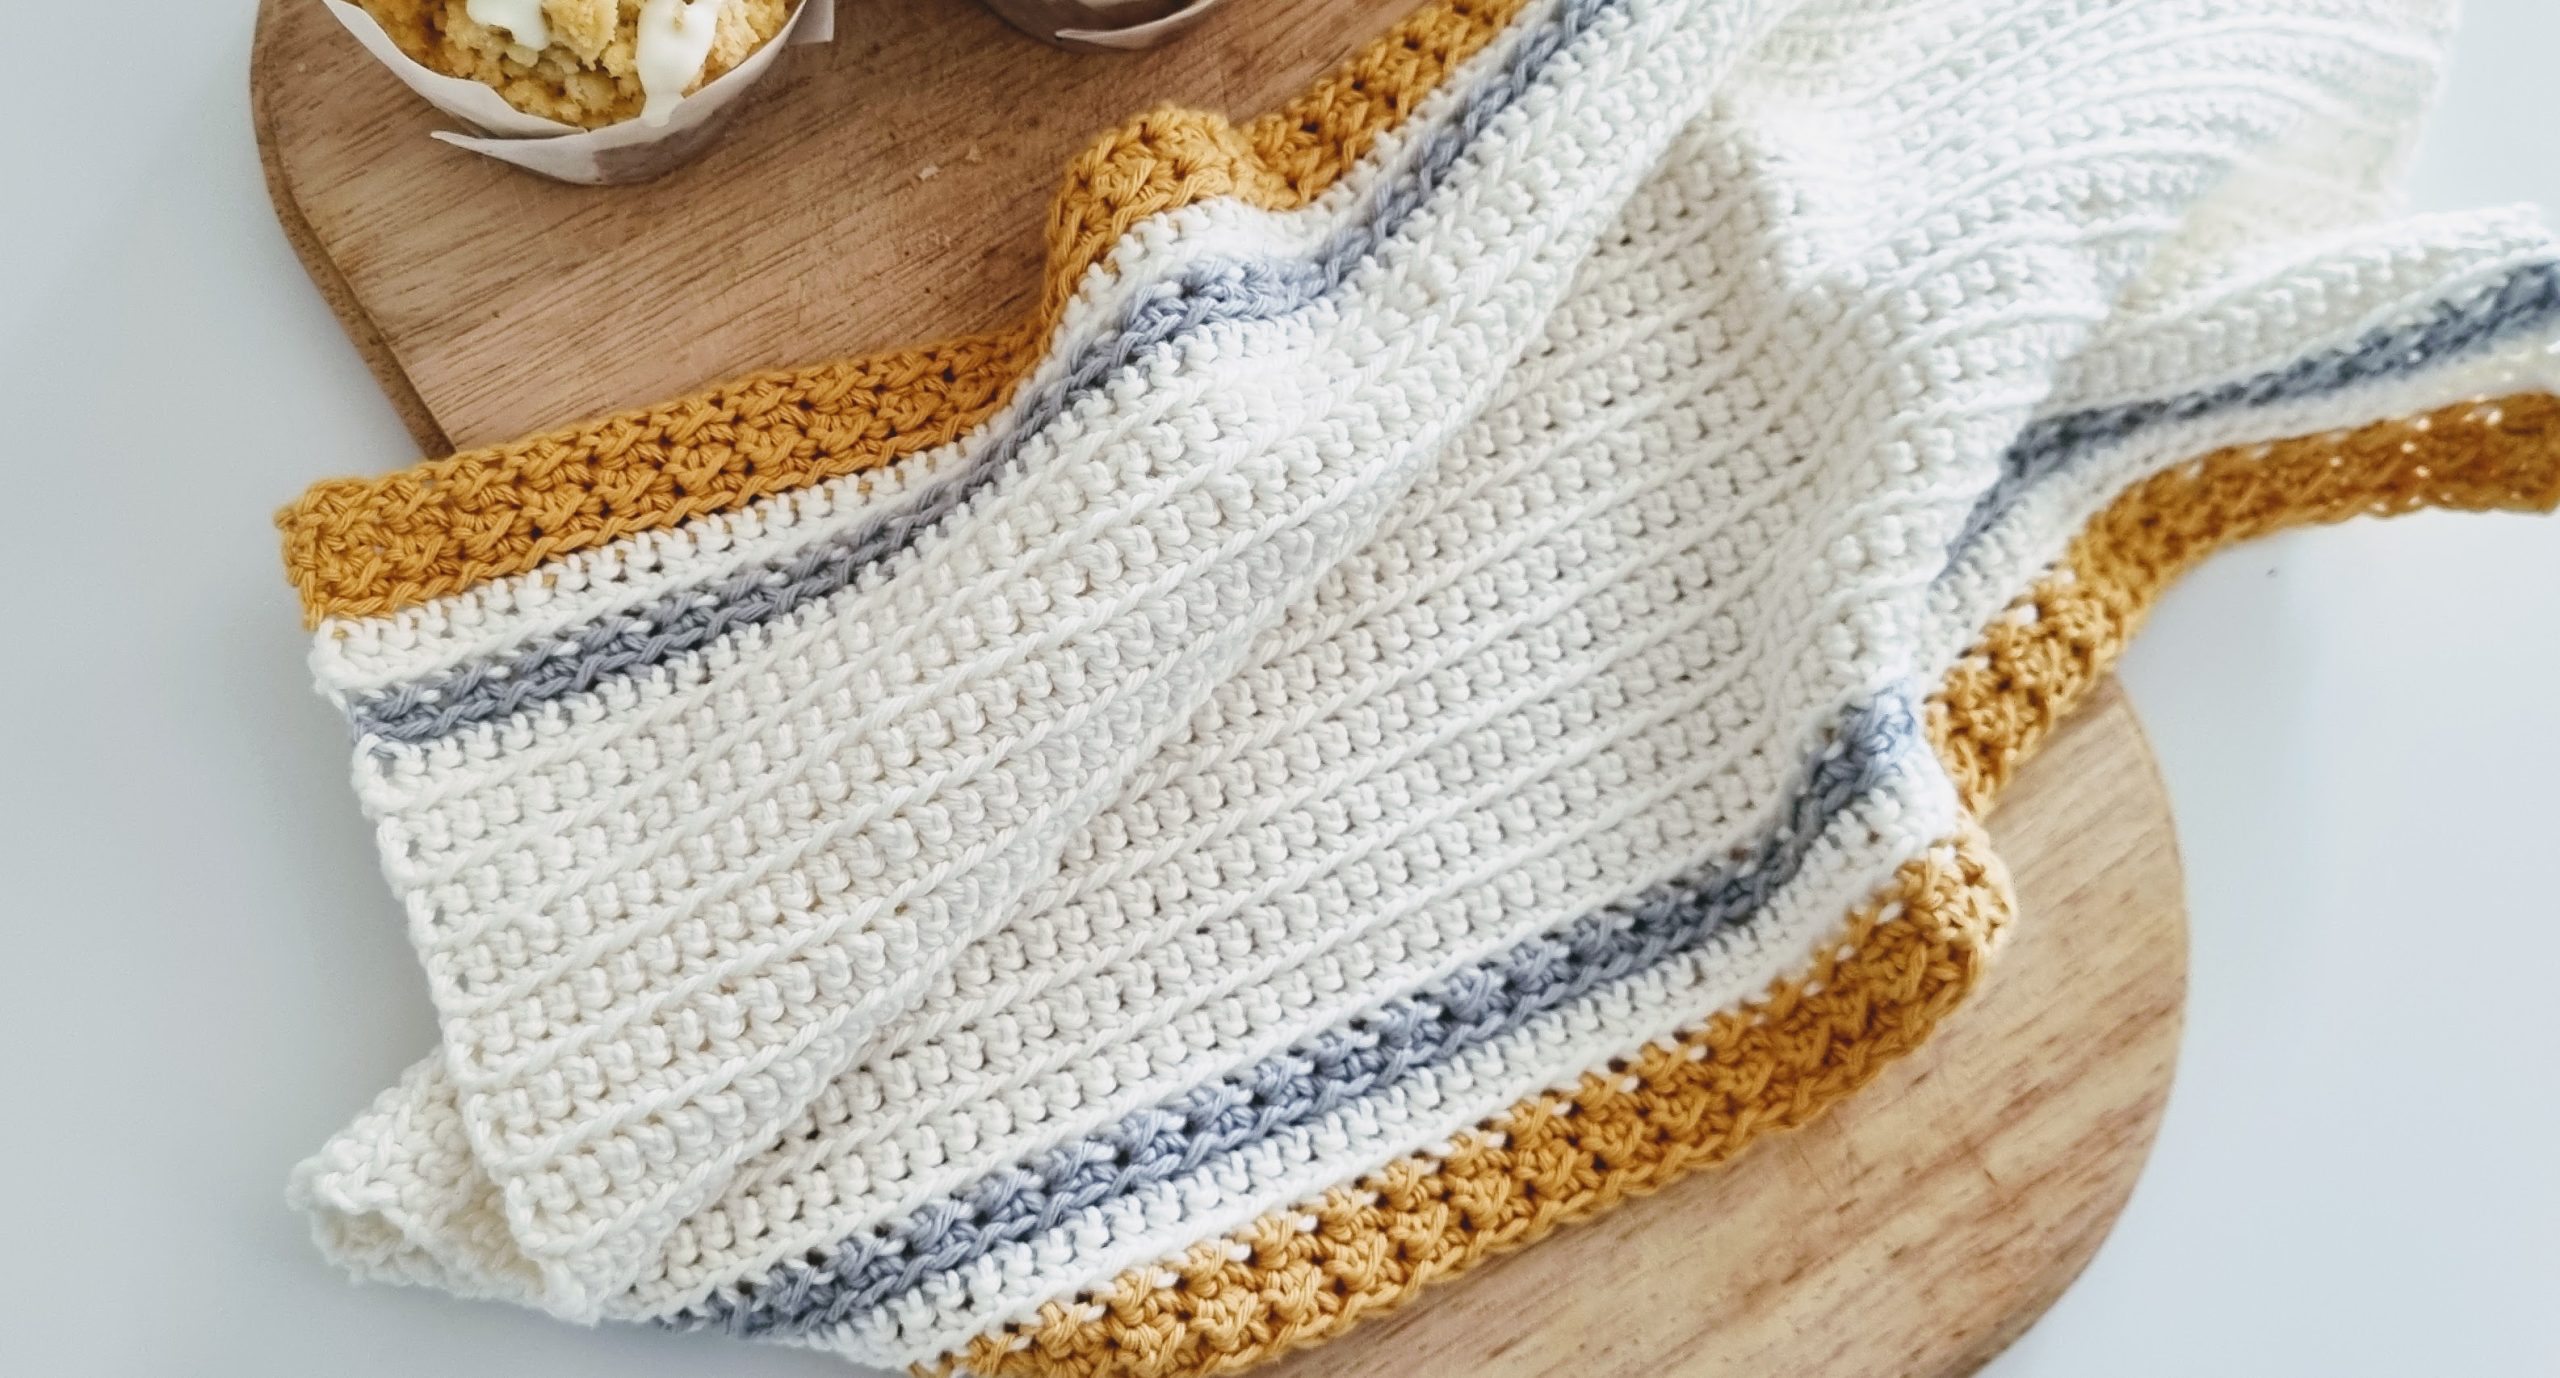 https://mycrochetspace.com/wp-content/uploads/2022/12/crochet-kitchen-towel-scaled.jpg